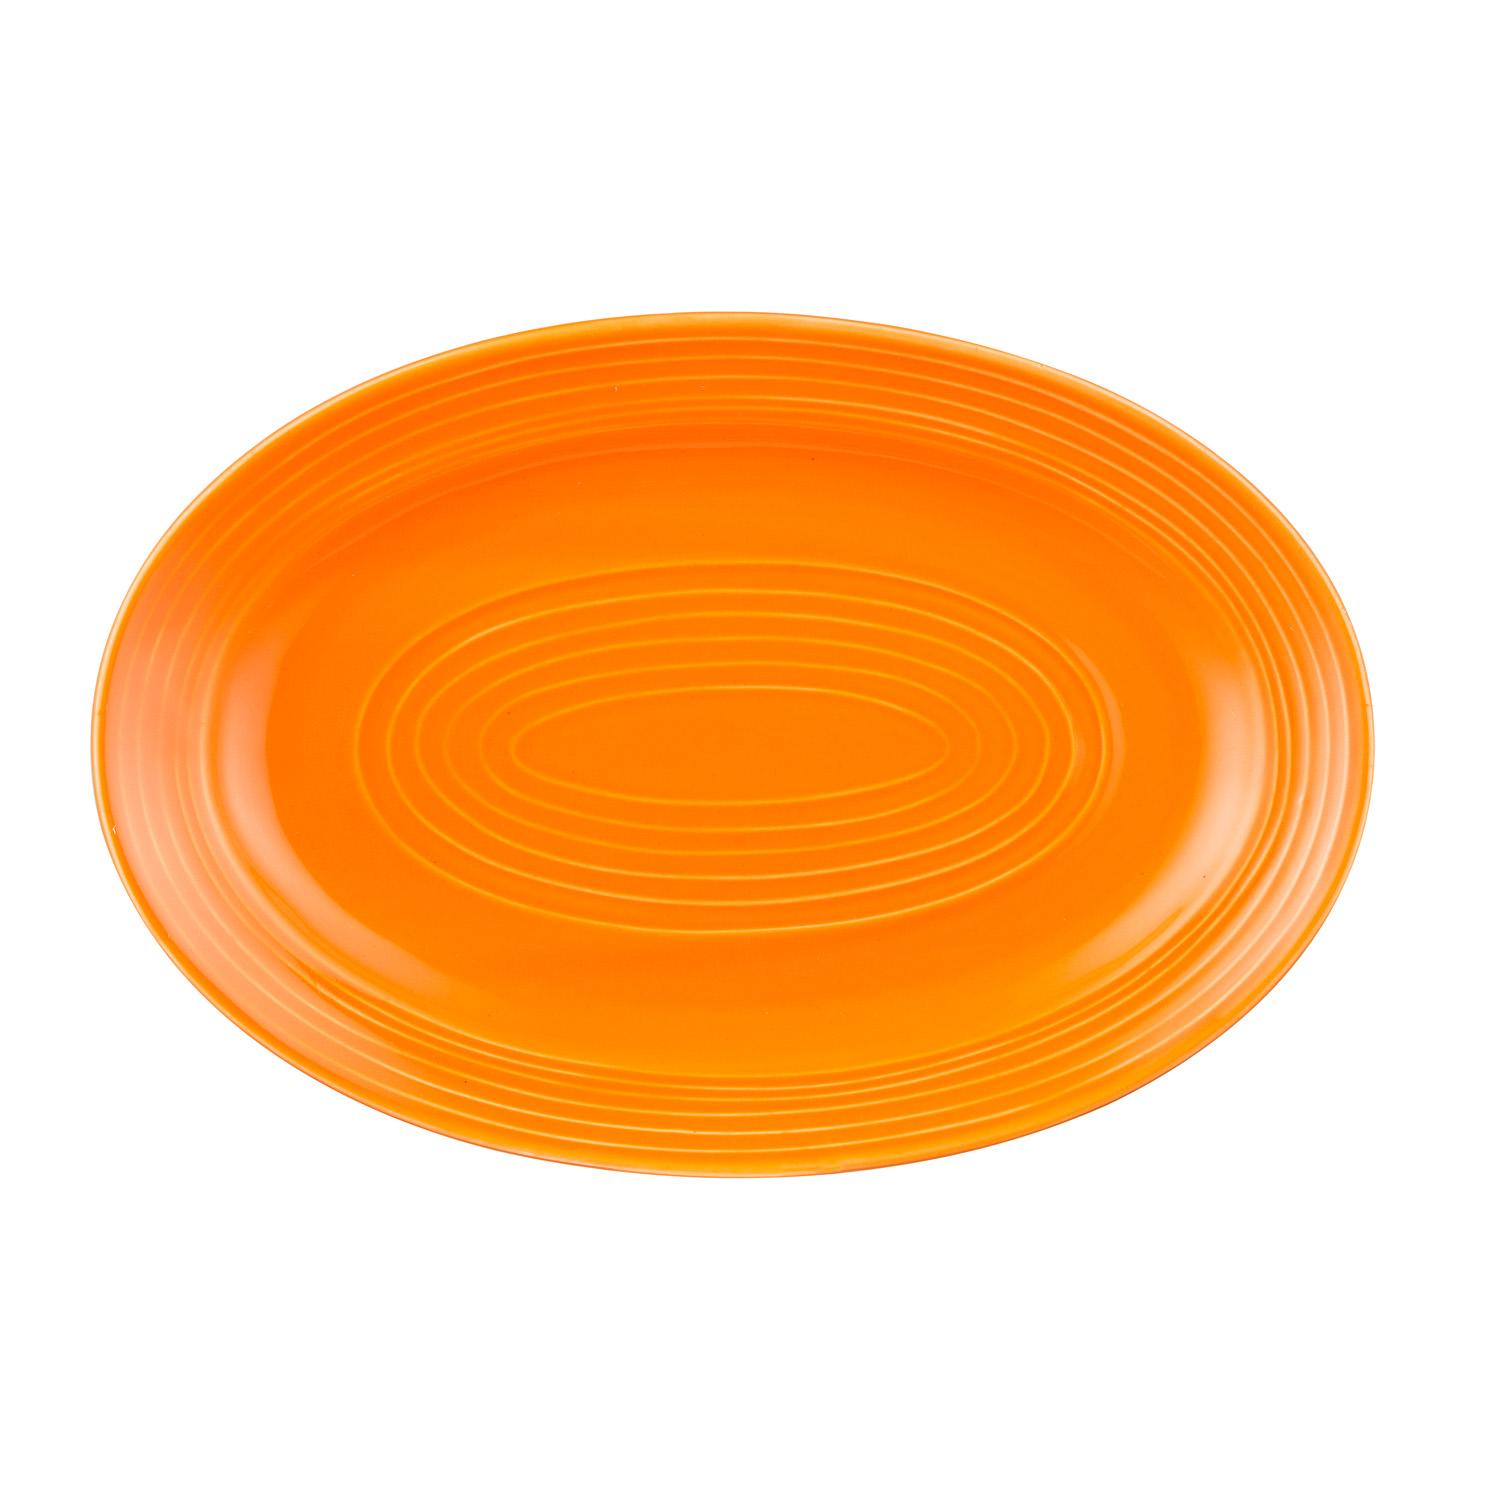 CAC China TG-13-TNG Tango Embossed Porcelain Tangerine Oval Platter 11 3/4"  - 1 dozen